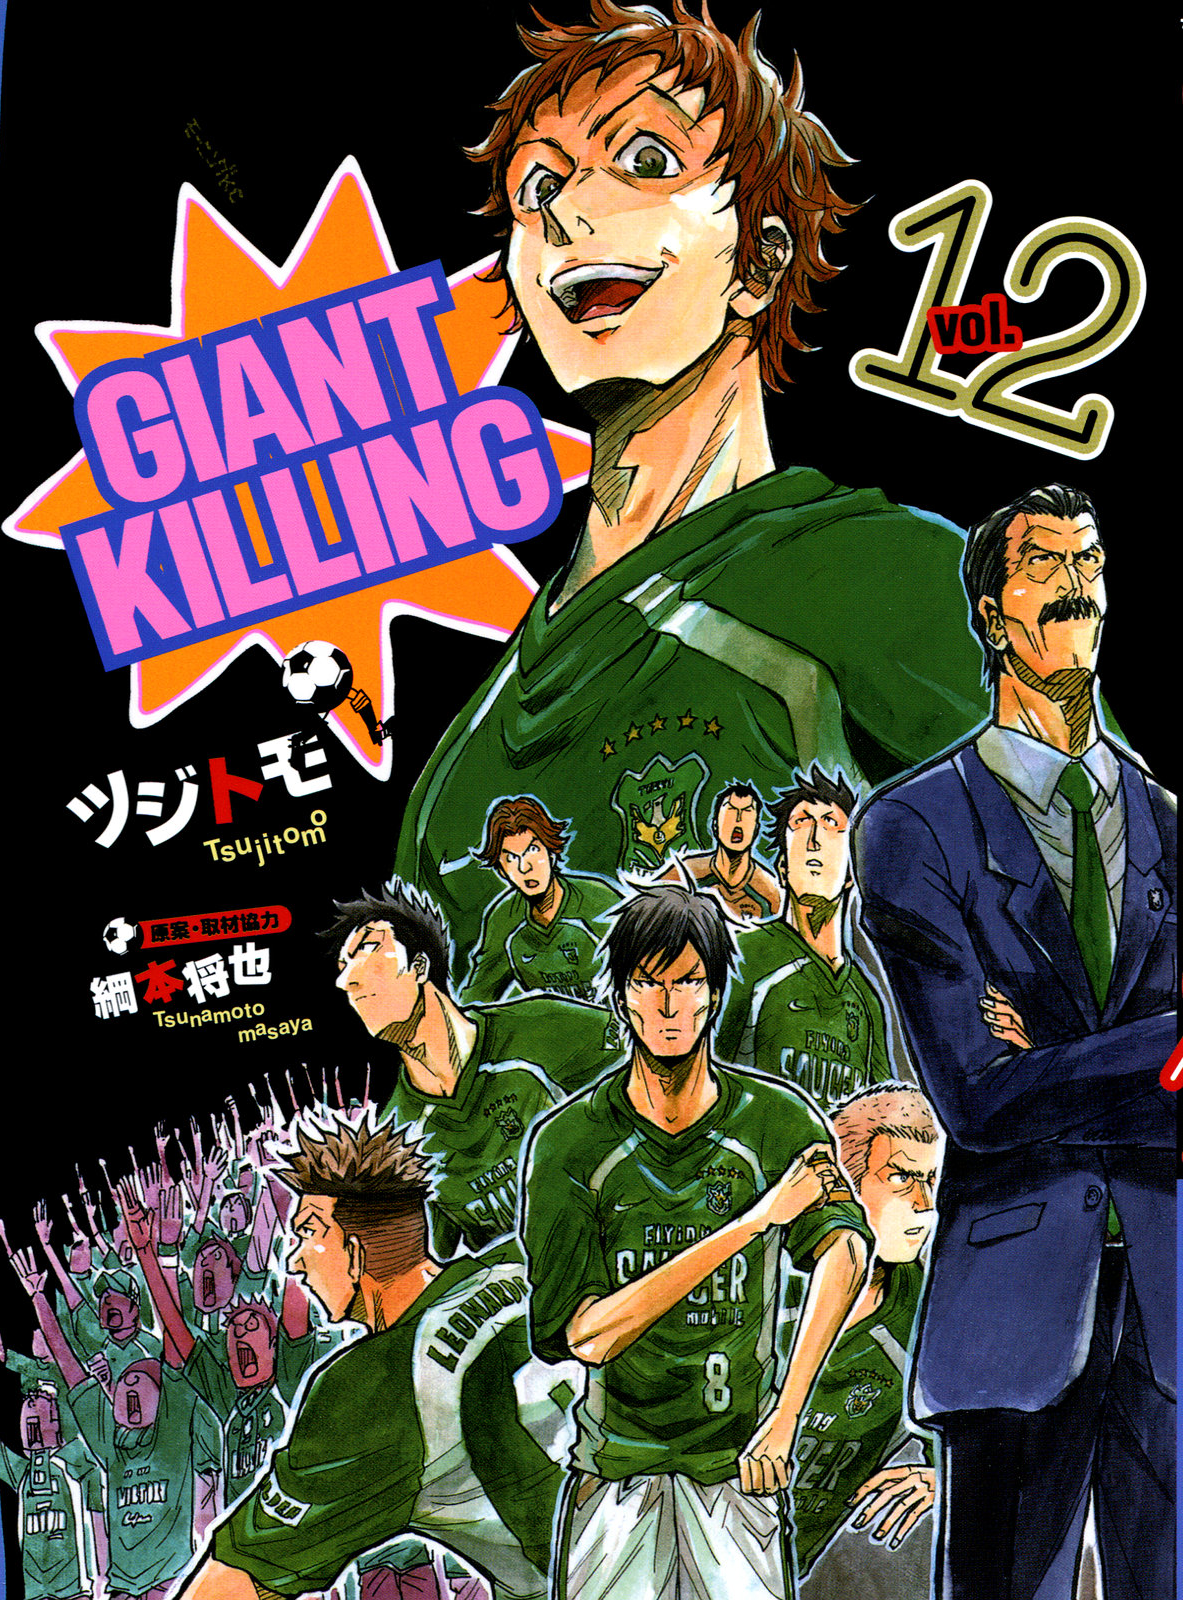 Giant Killing, Volume 24